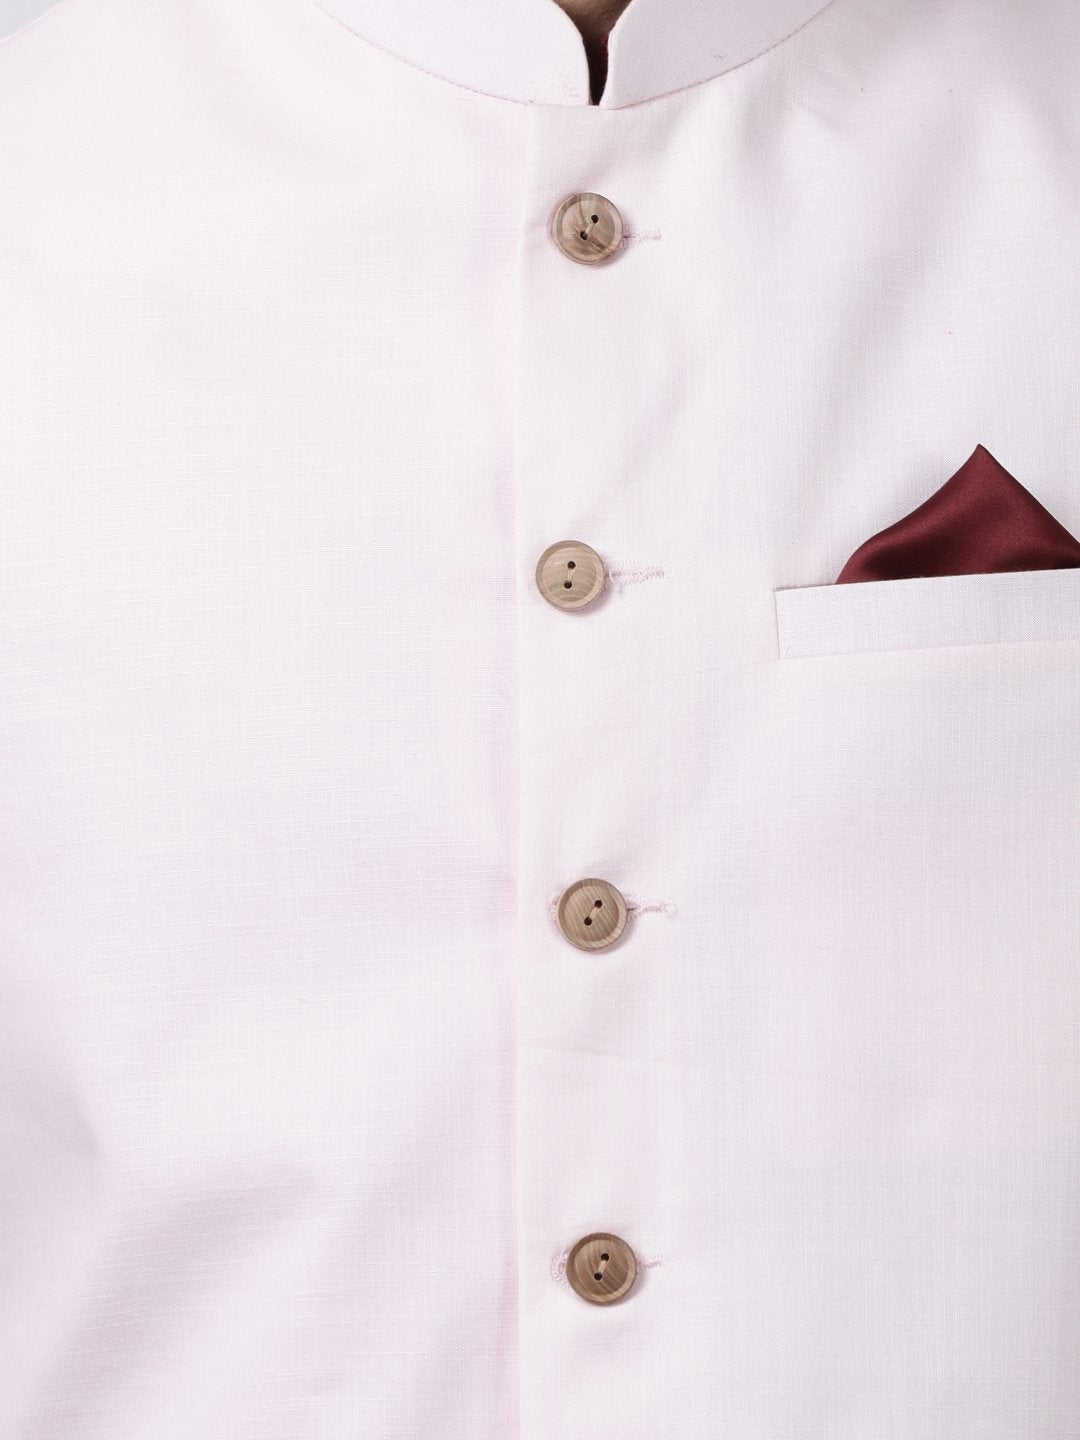 Men's Maroon Cotton Blend Ethnic Jacket, Kurta and Dhoti Pant Set